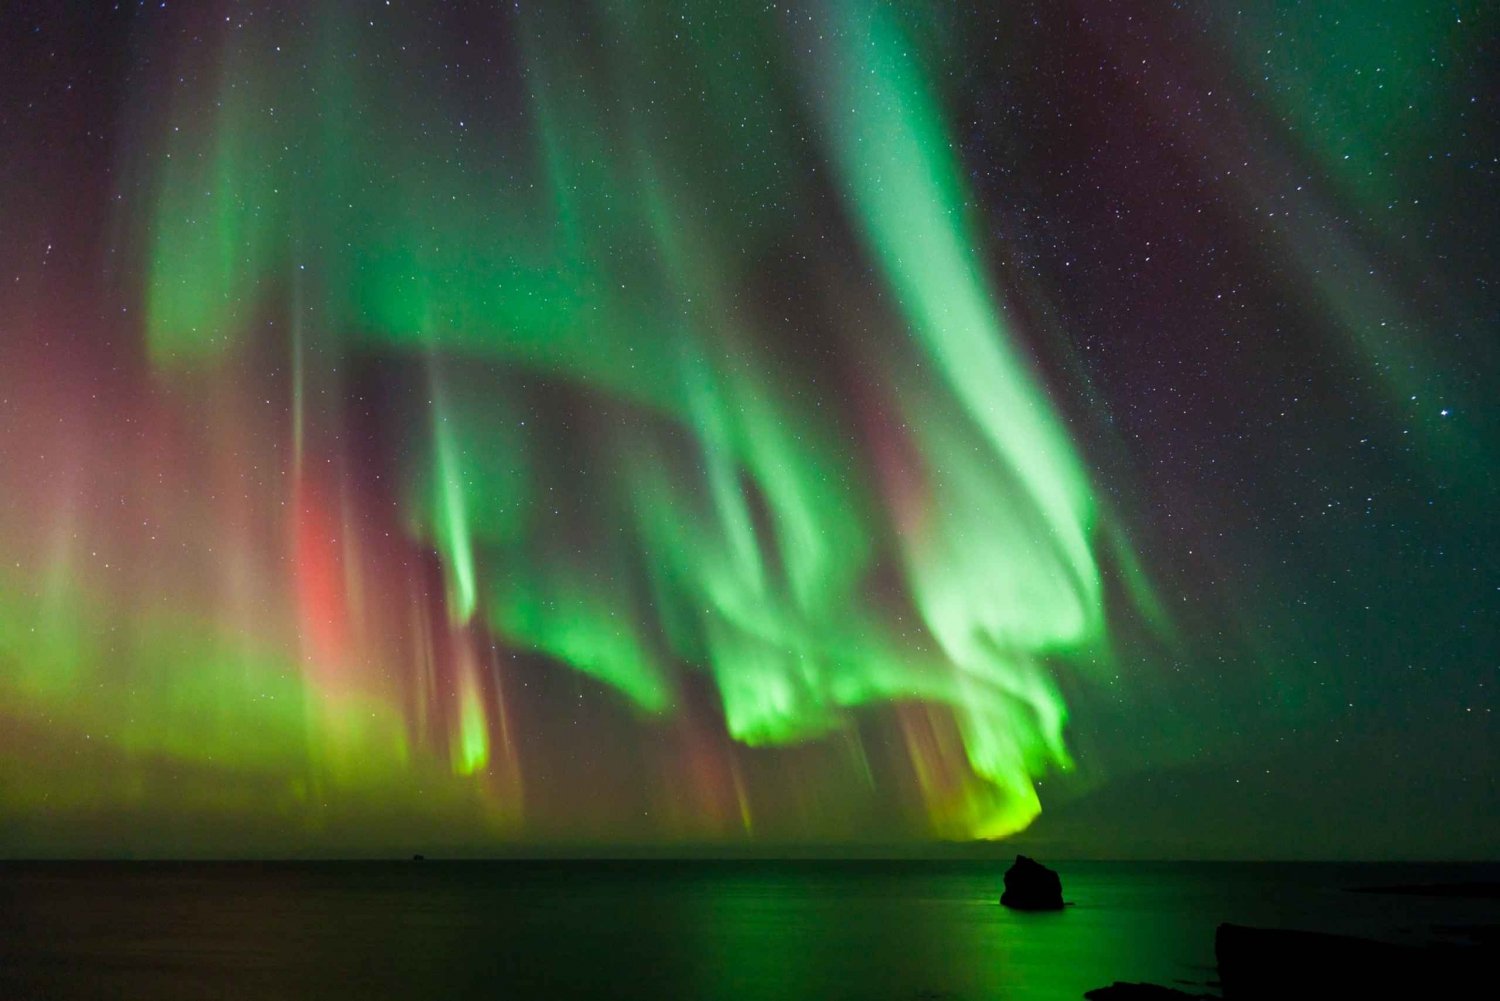 Reykjavik: tour premium da aurora boreal com fotos gratuitas